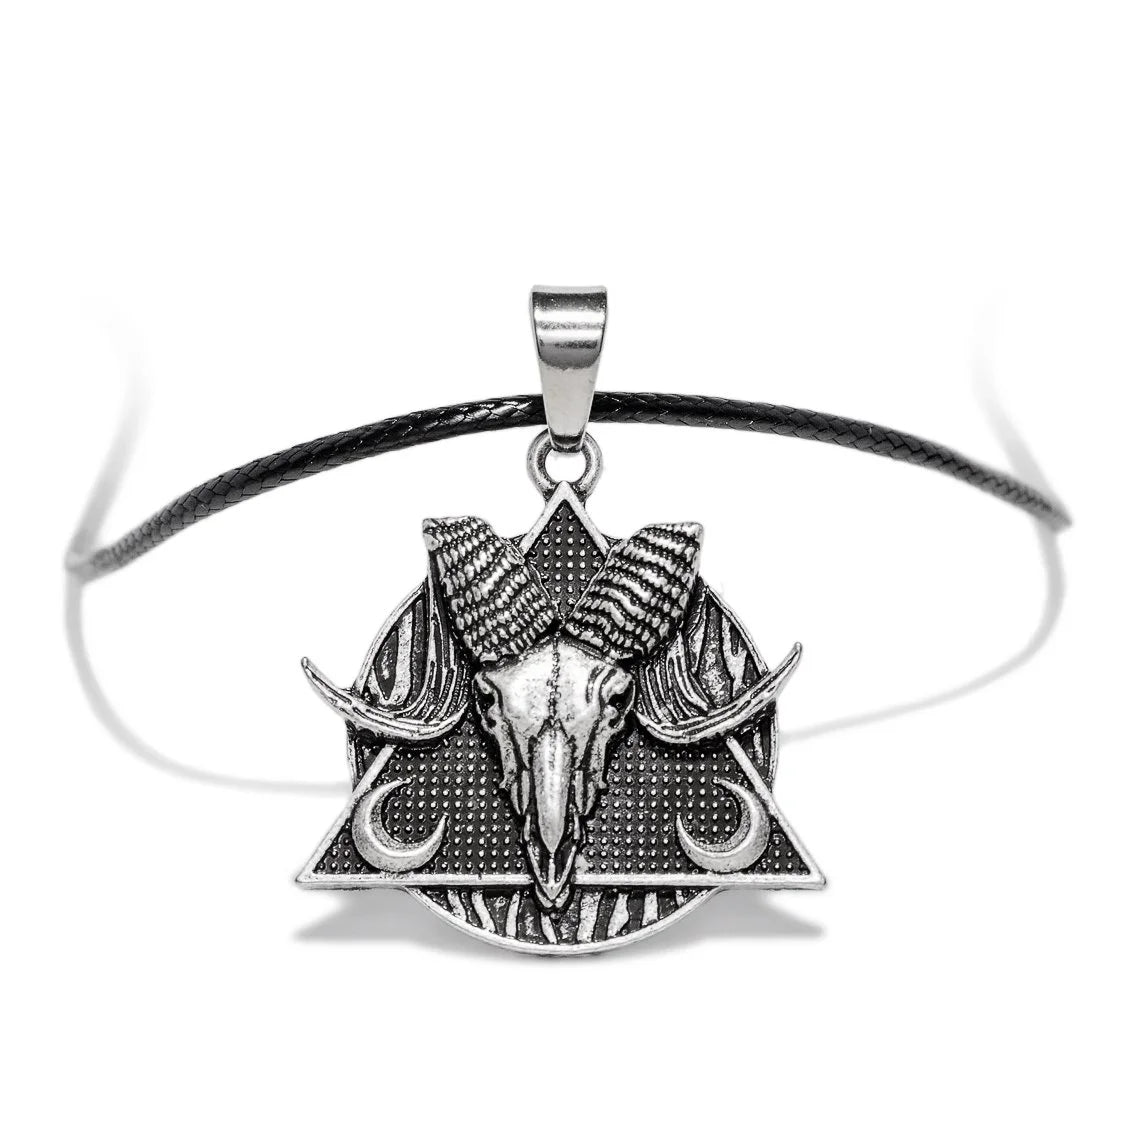 Black Occult Symbol DeltaRam Pendant and Necklace - Elise - Dr Faust